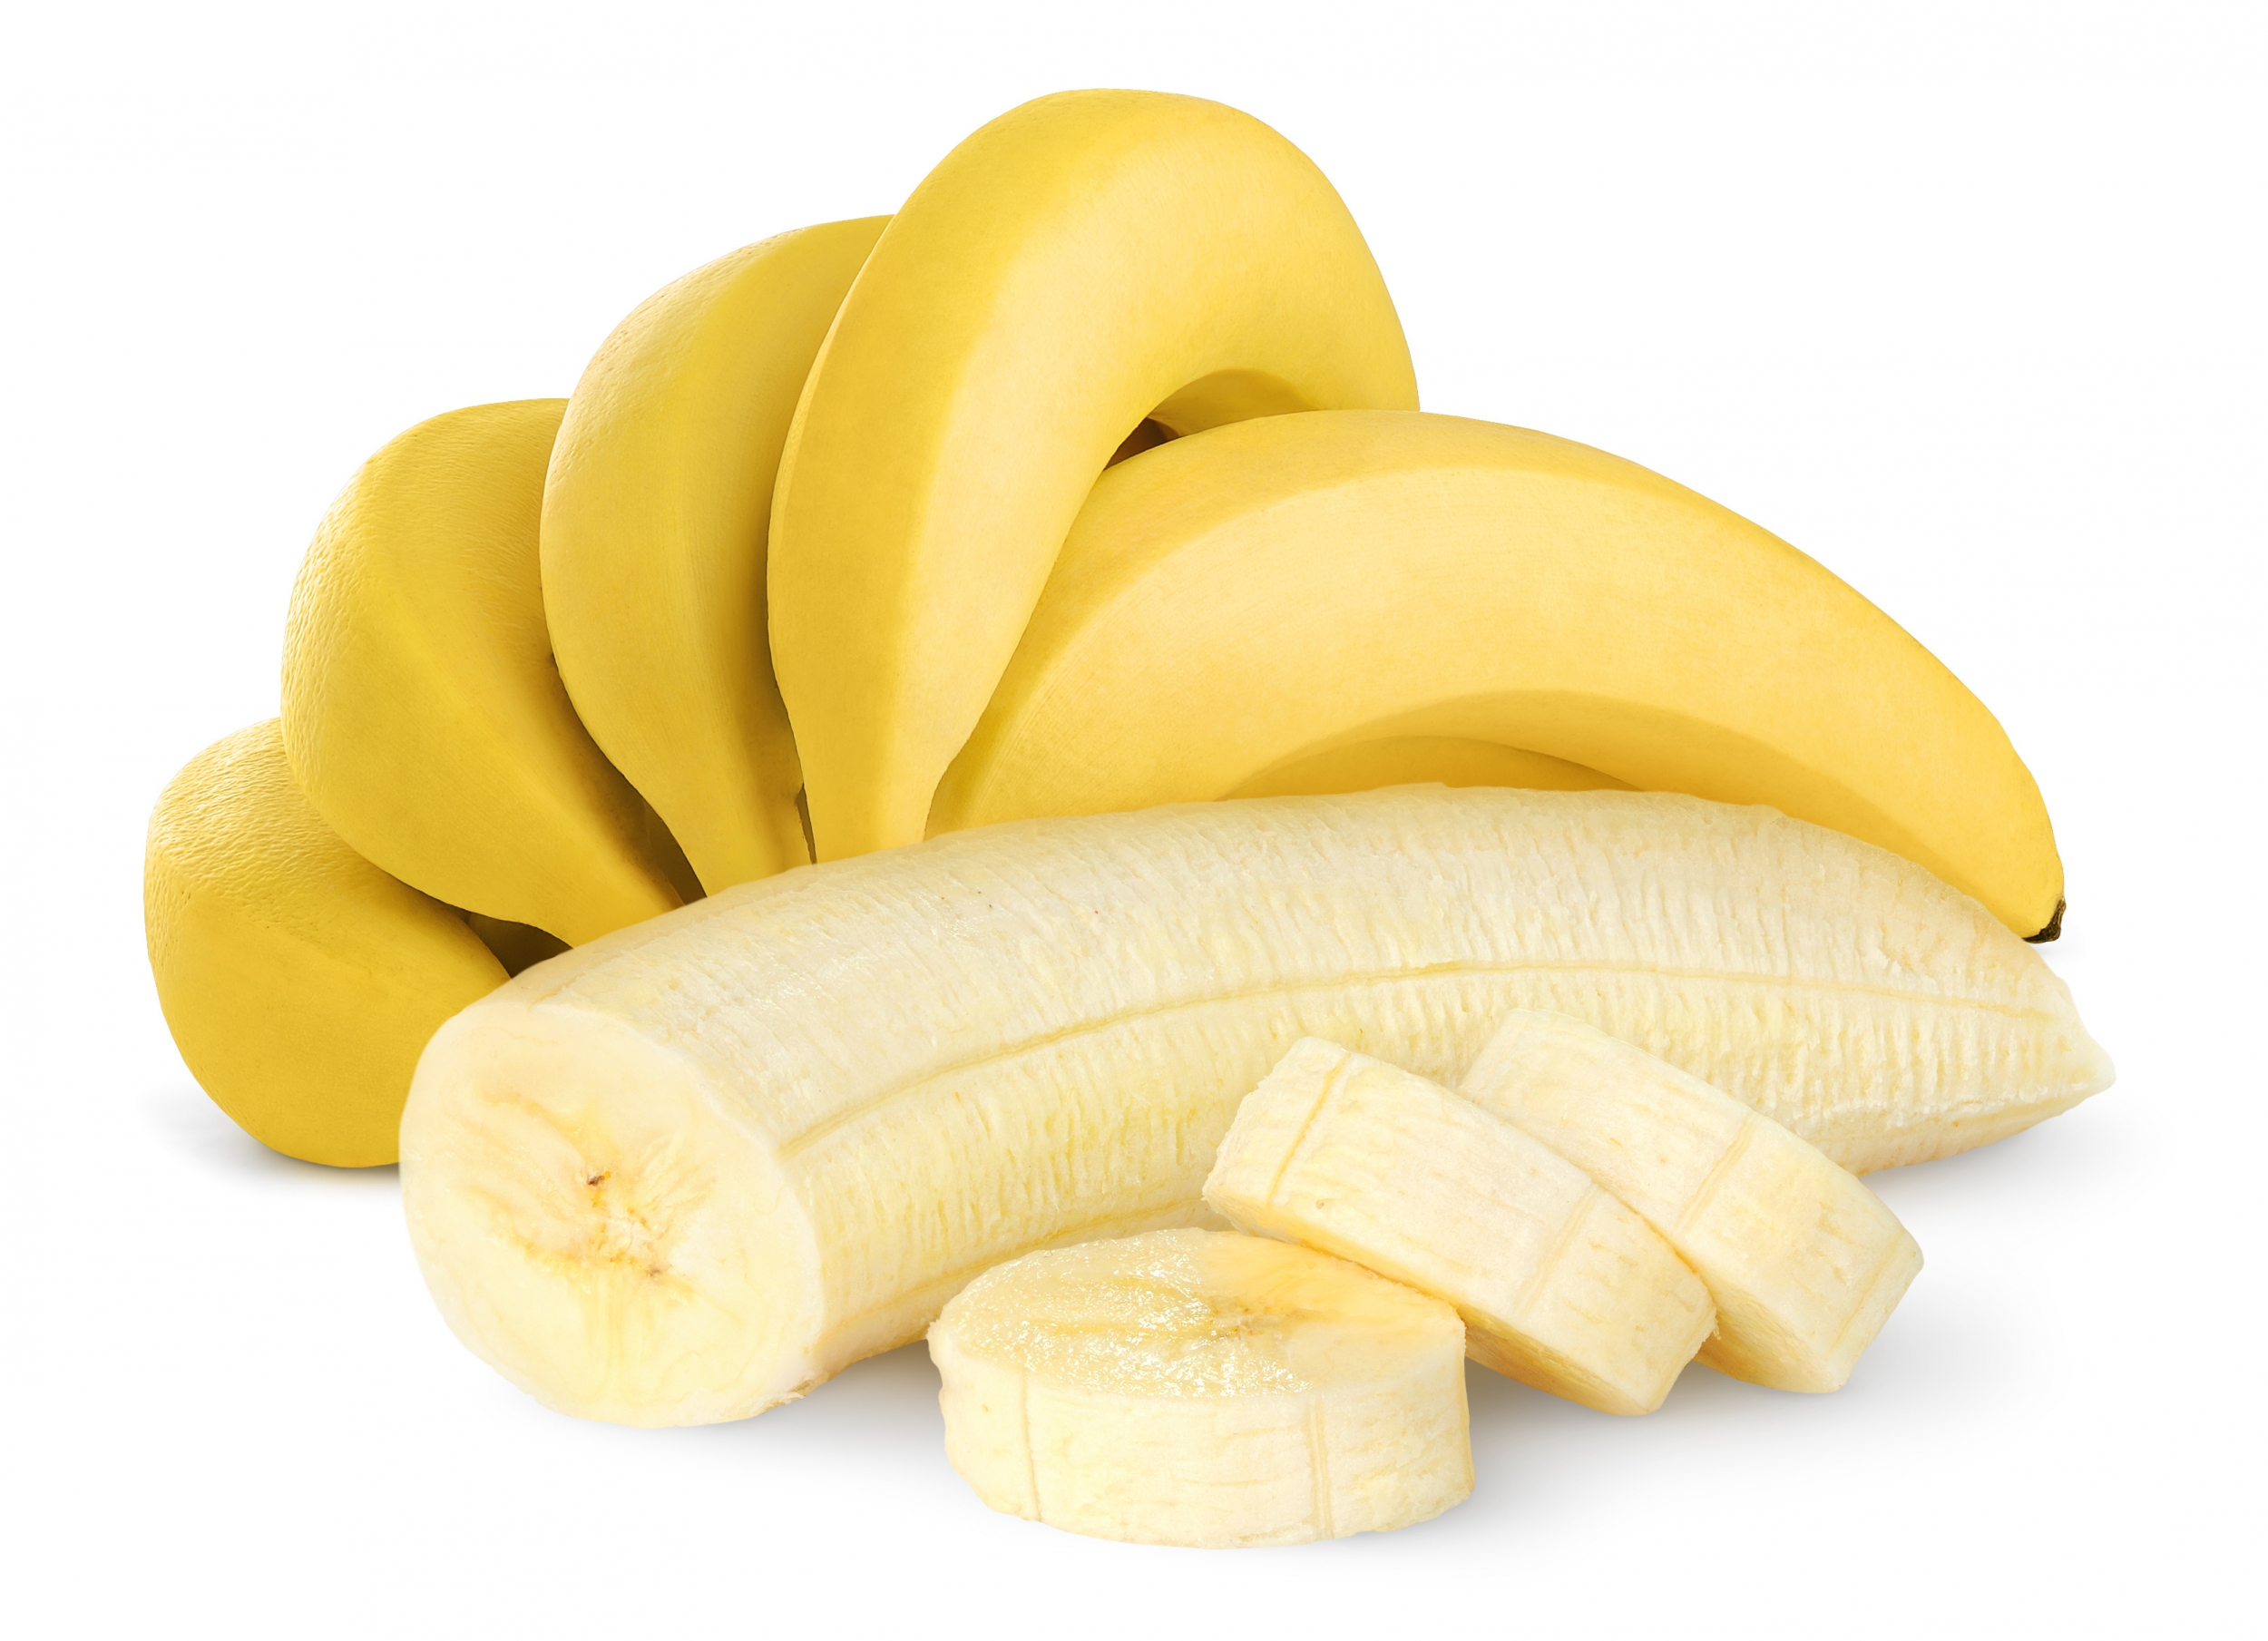 502-banane